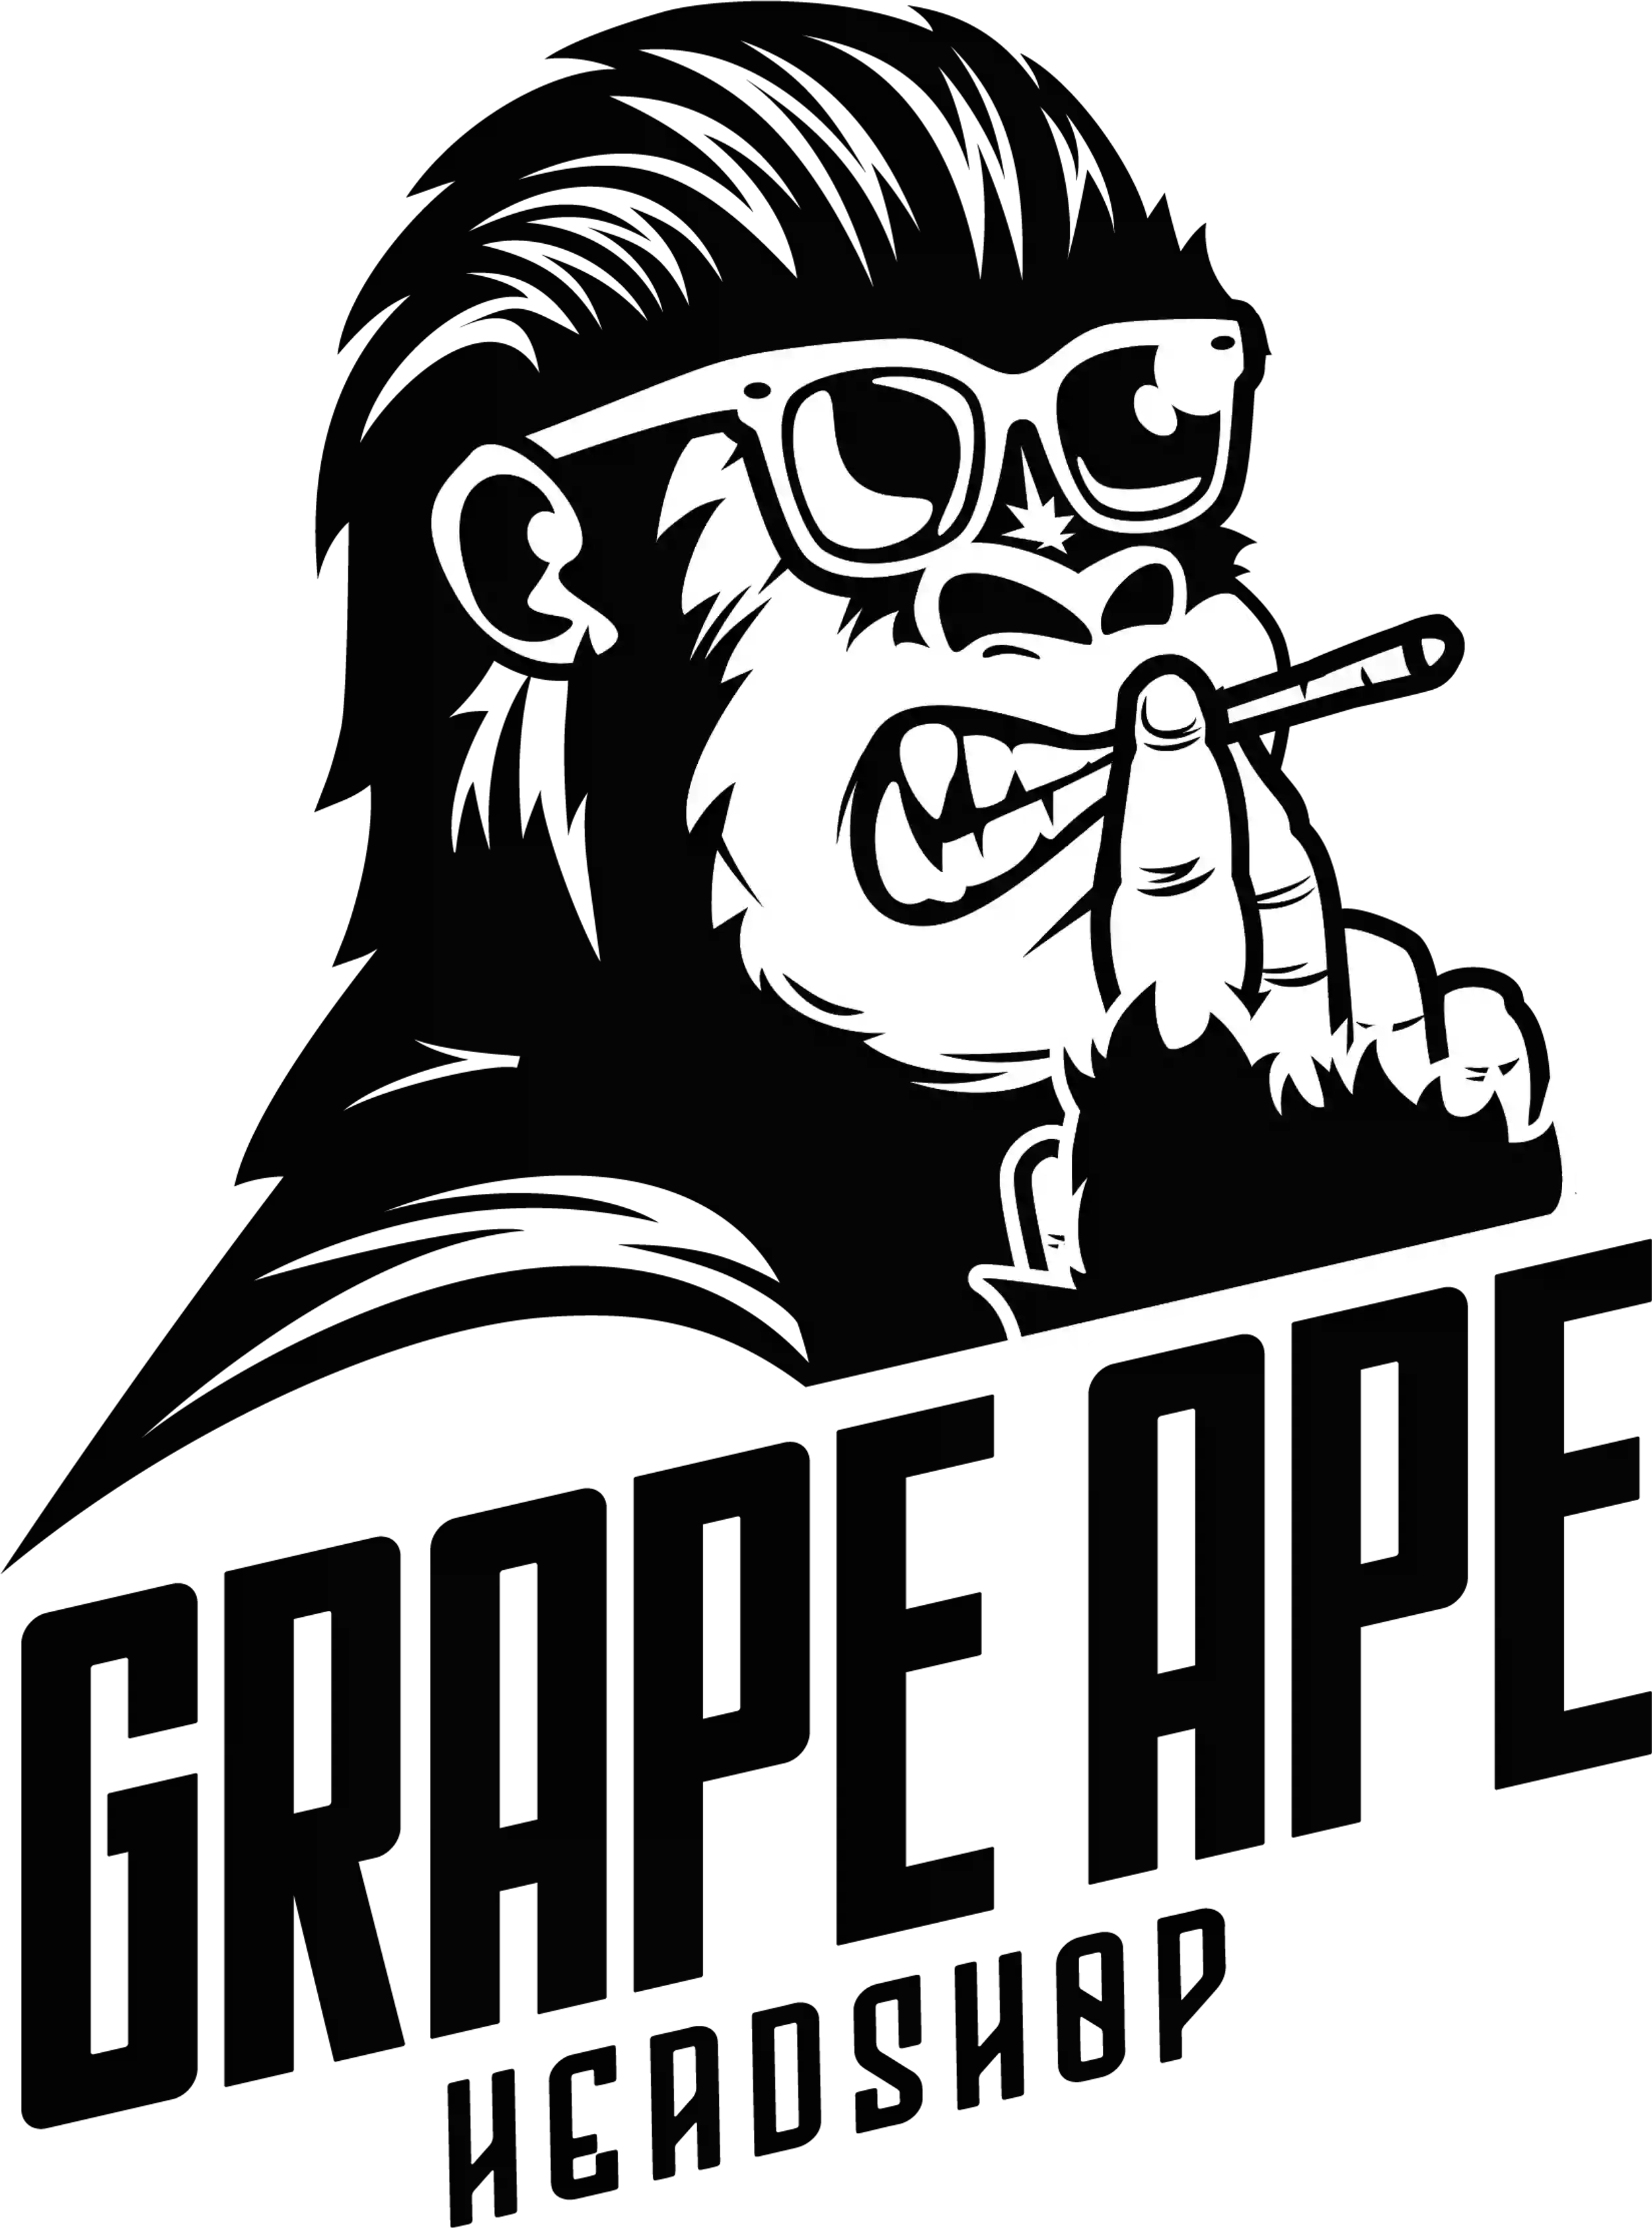 The Grape Ape Headshop